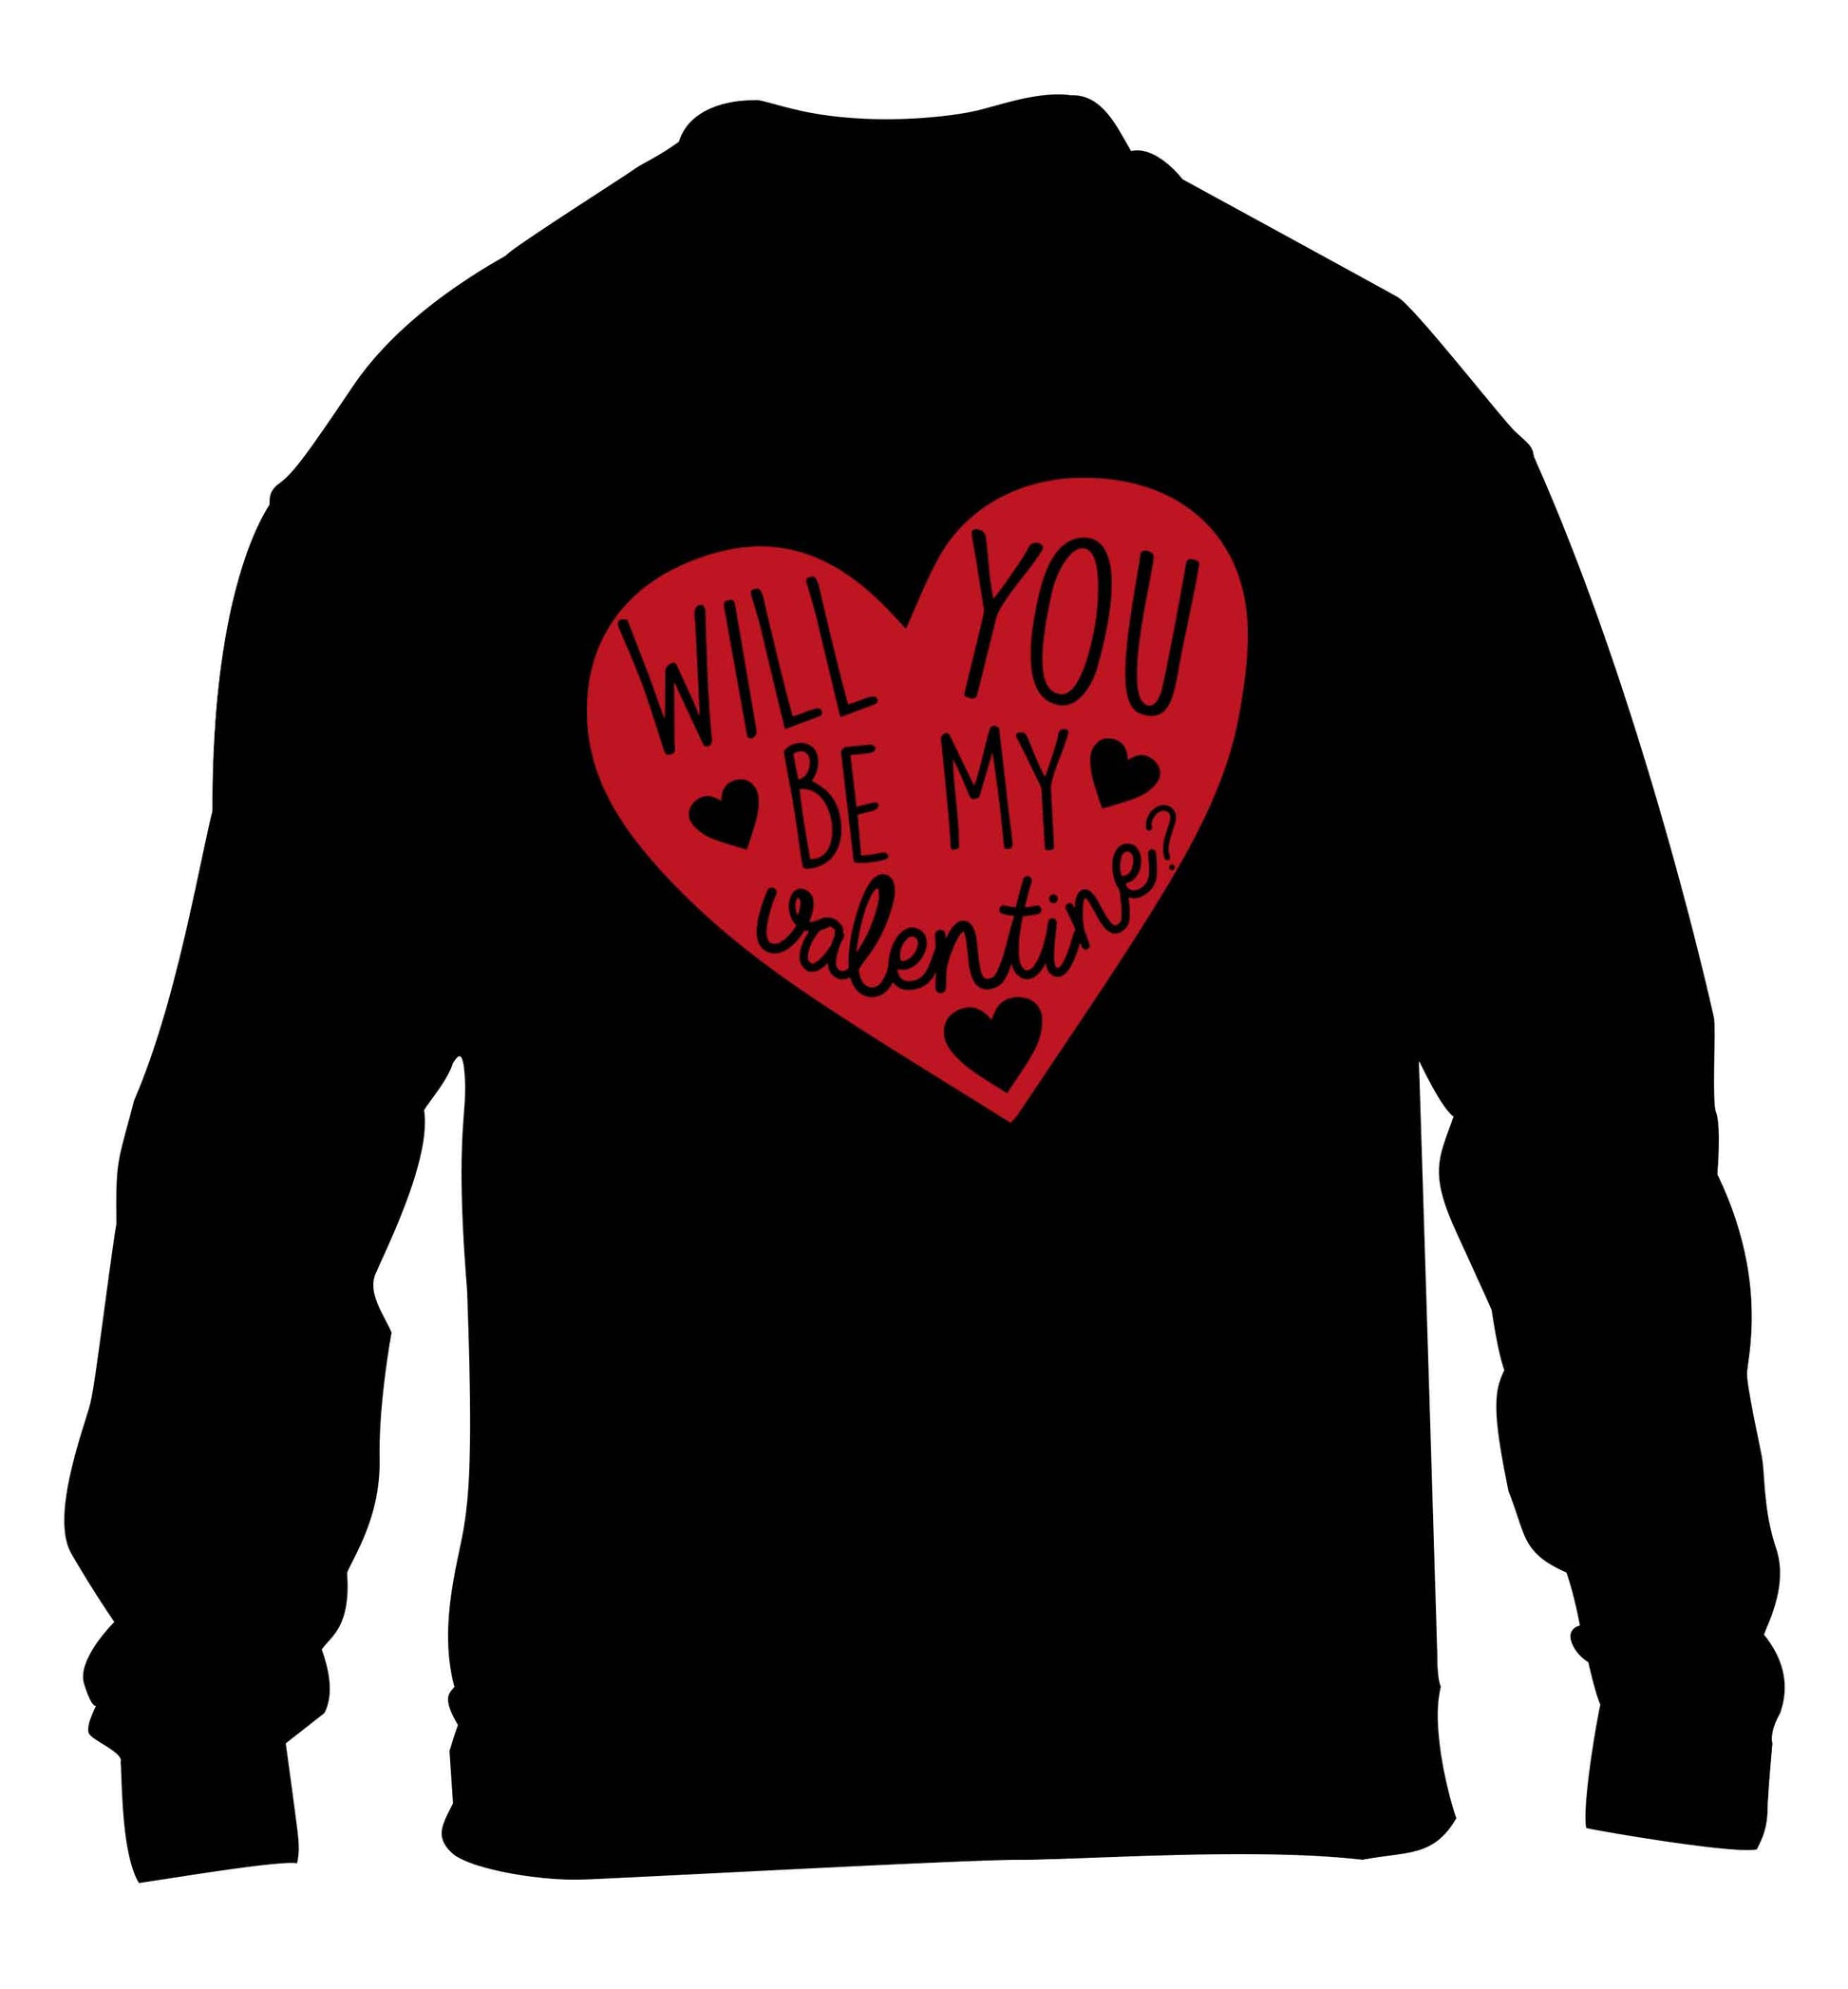 Will you be my valentine? children's black sweater 12-13 Years